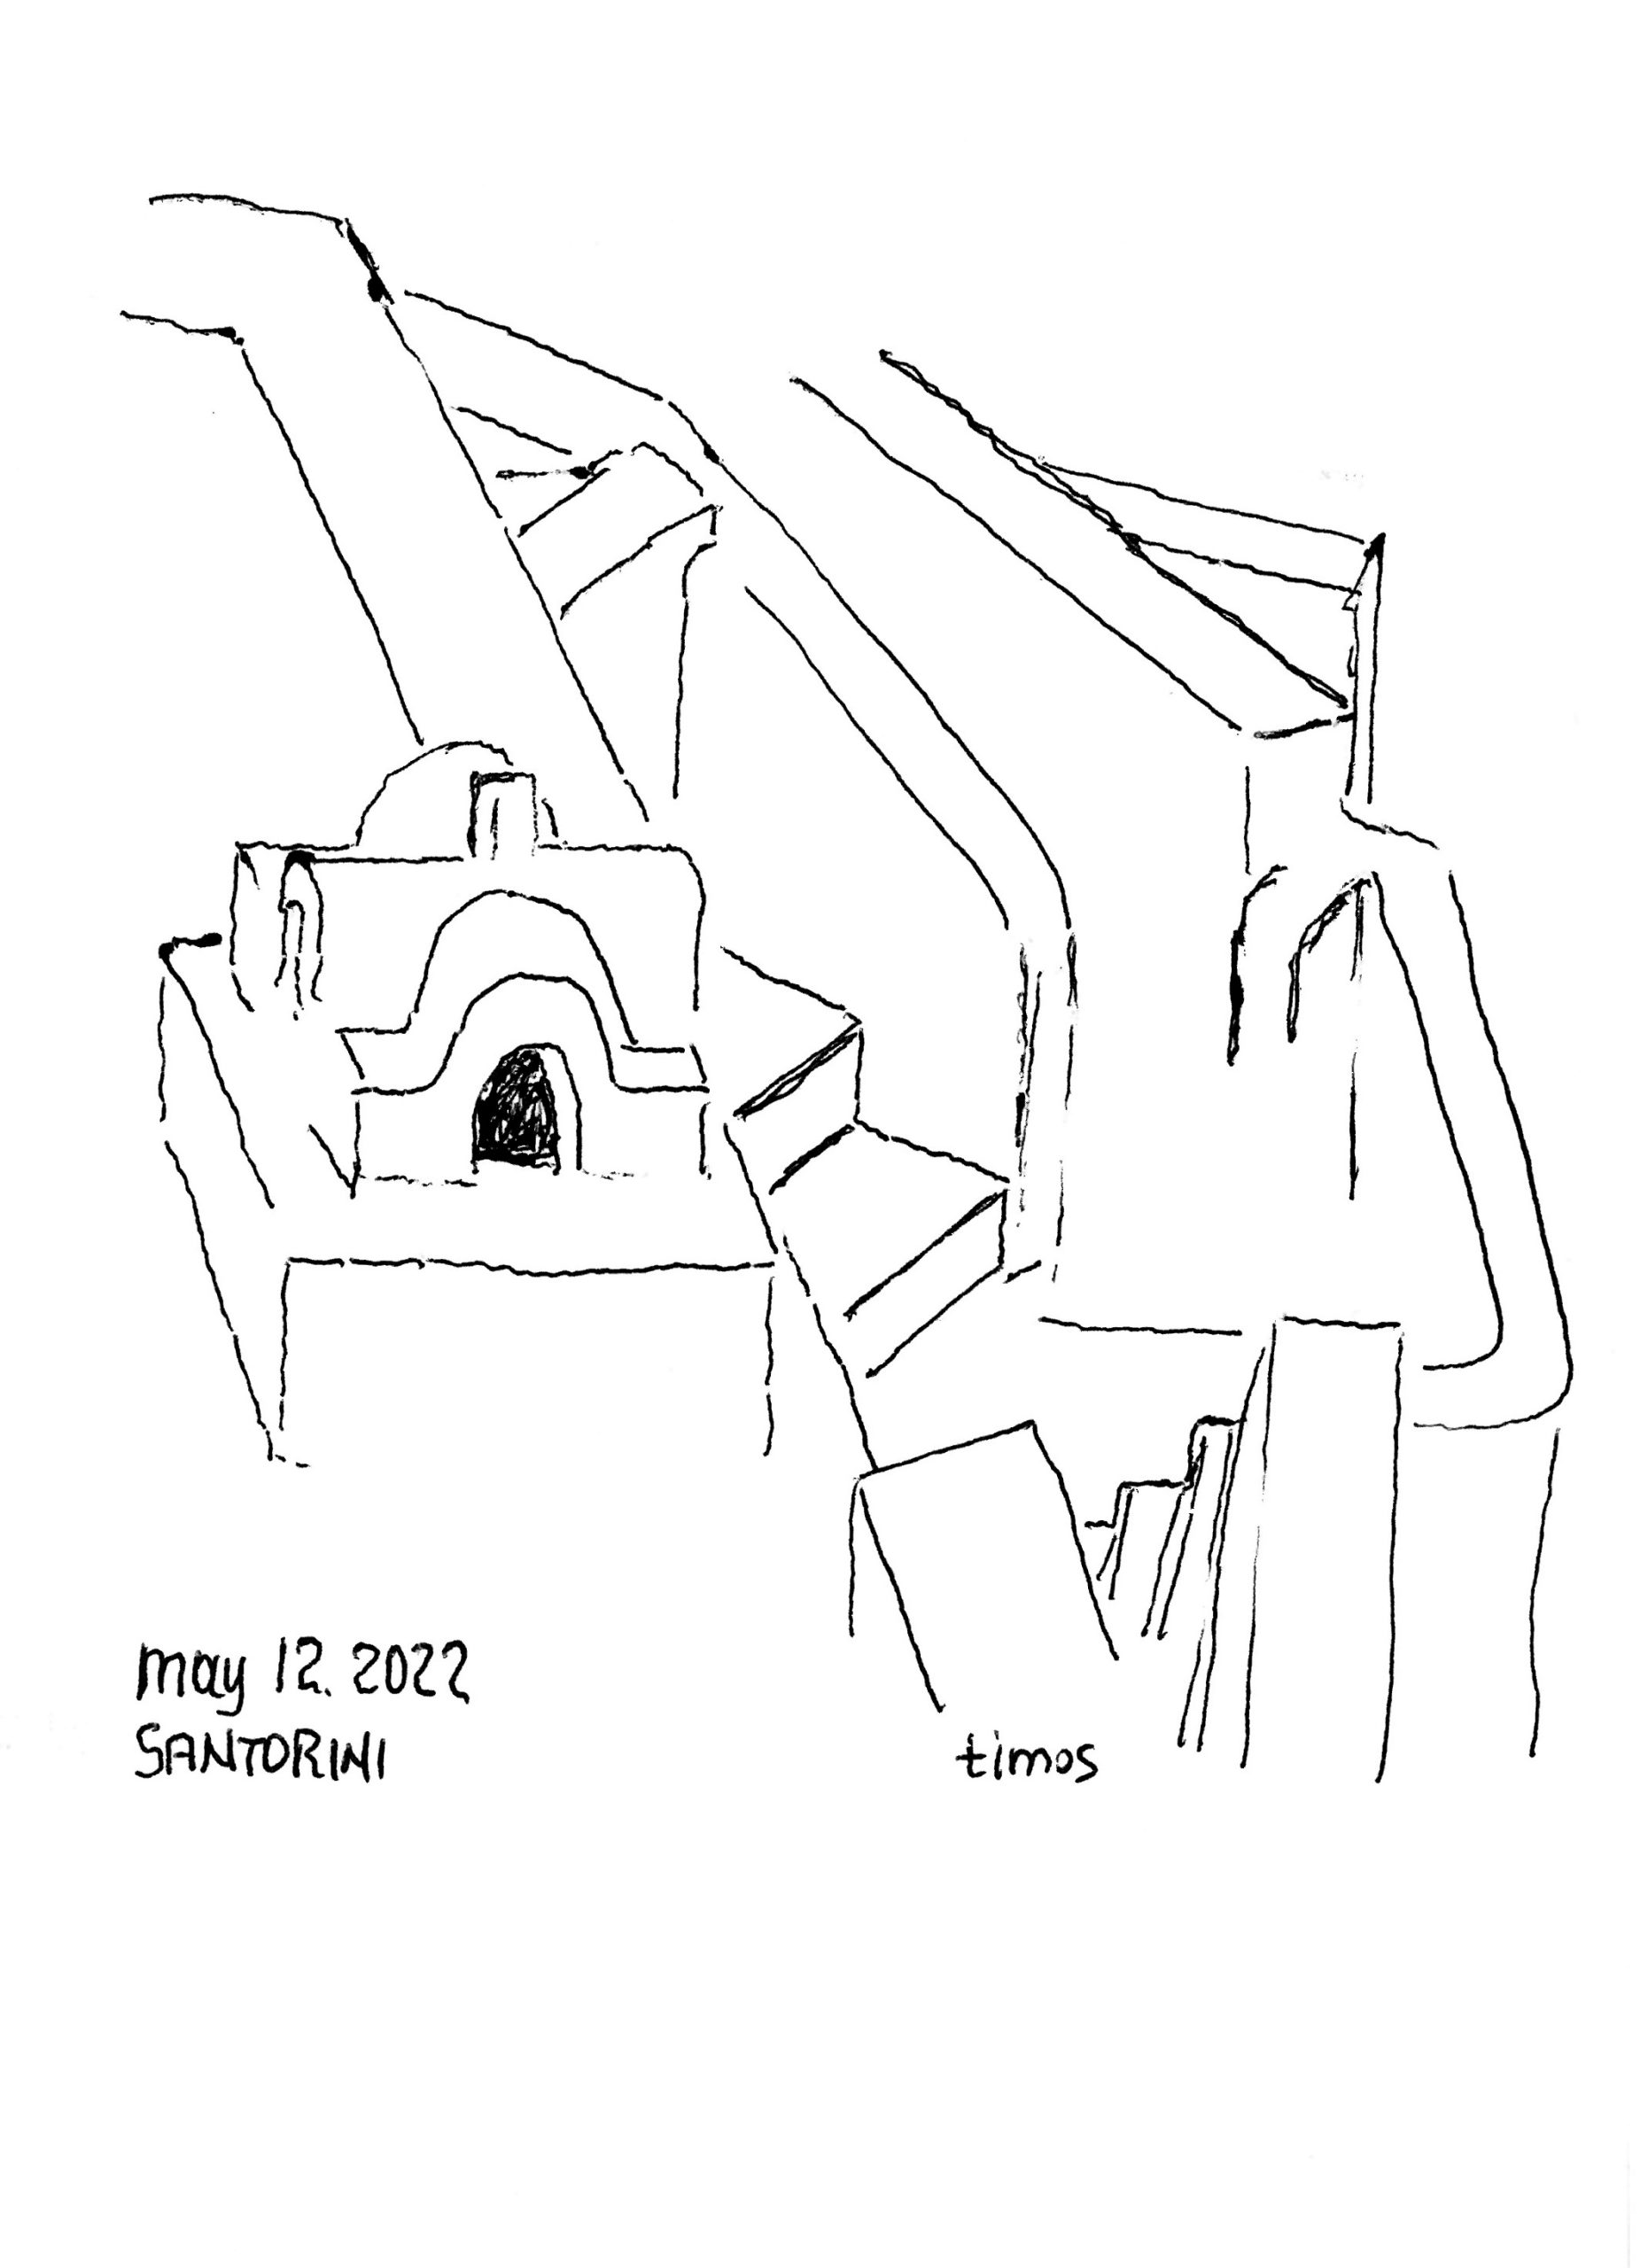 Santorini shapeform c – basic study for draft